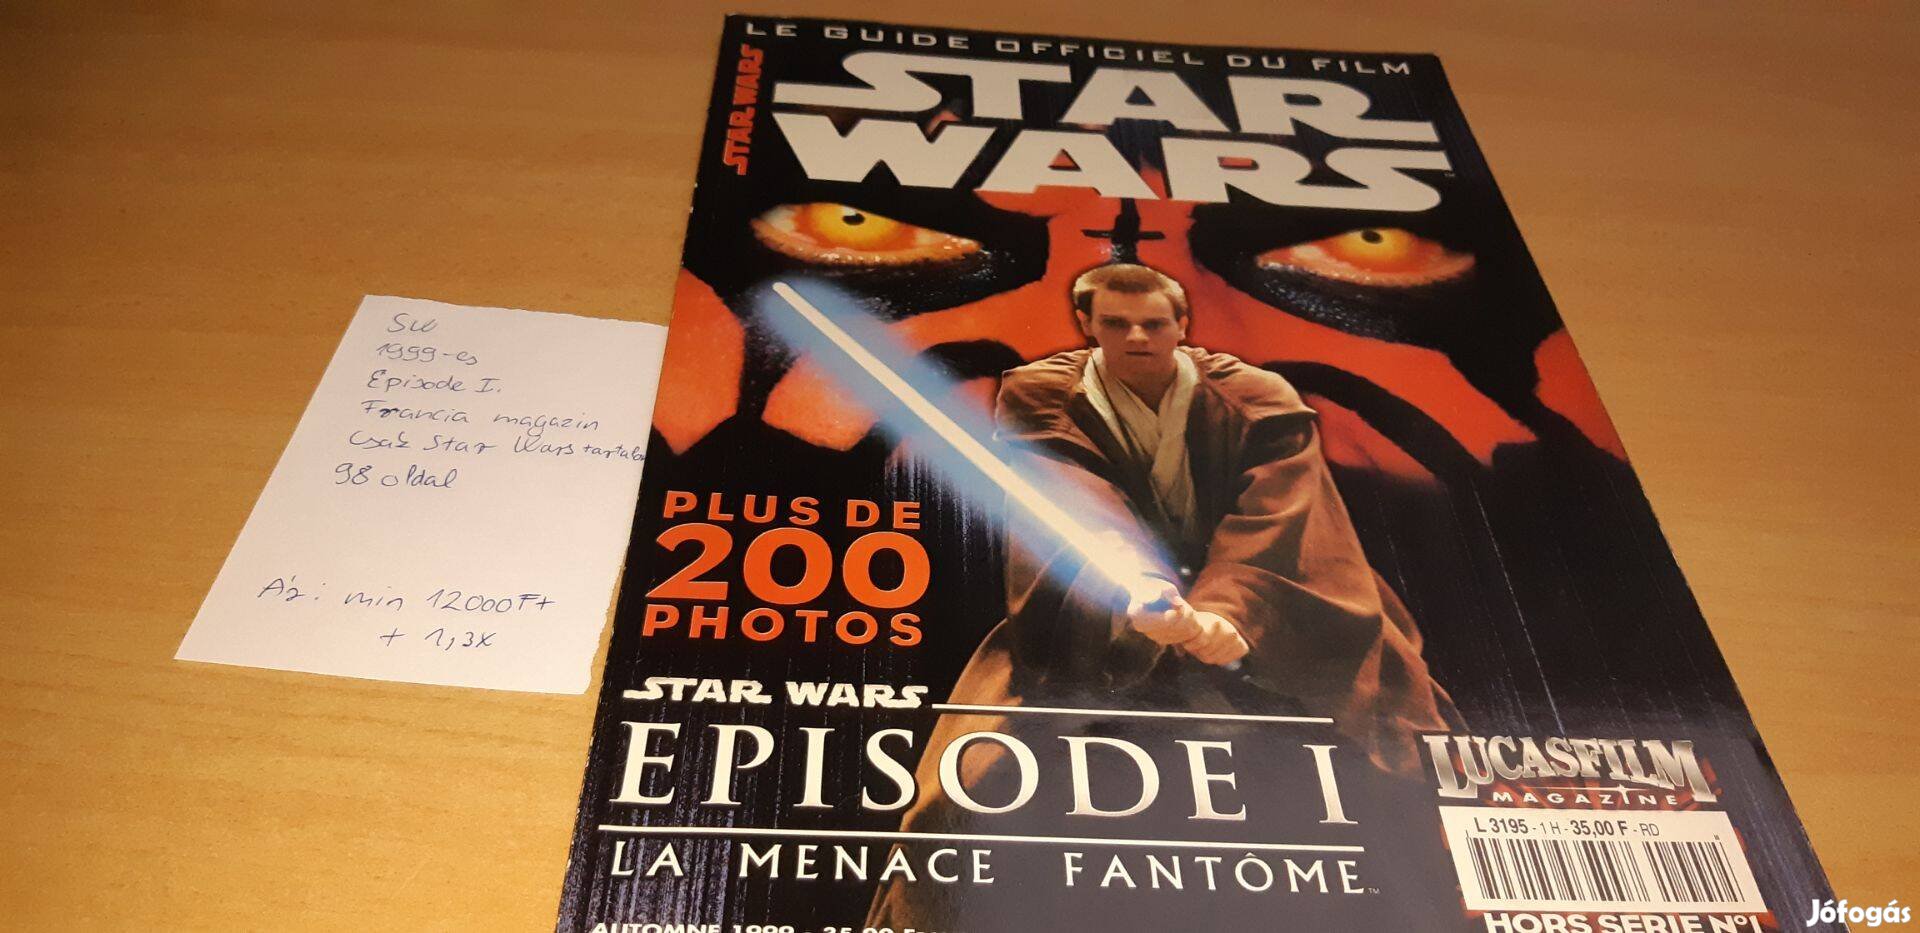 Star Wars Episode I. kiadvány Francia magazin, csak Star Wars tartalom